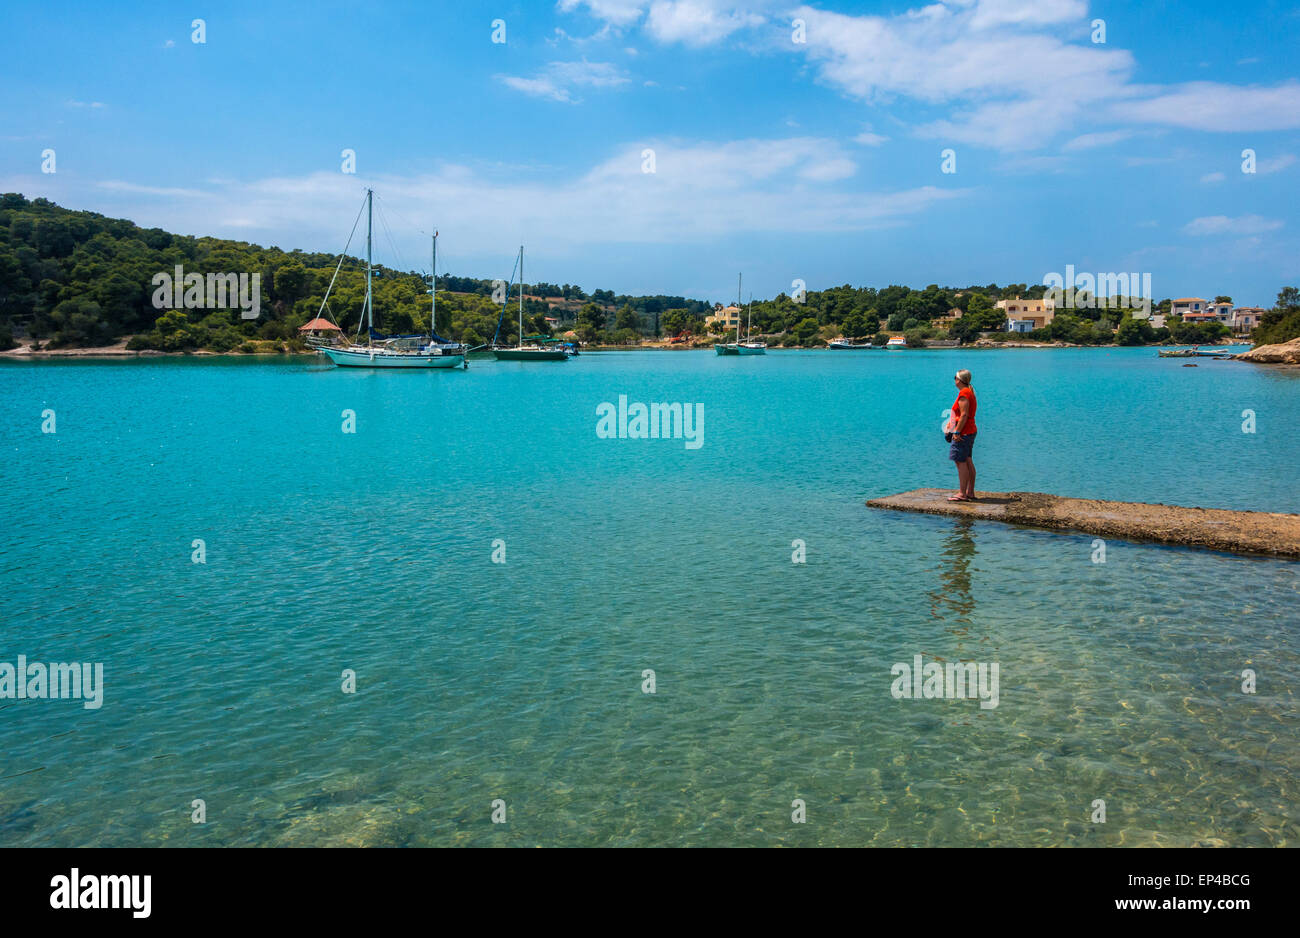 Porto Cheli Portocheli harbour harbor, Greece, with boats and solitary figure, blue sky, blue sea Stock Photo